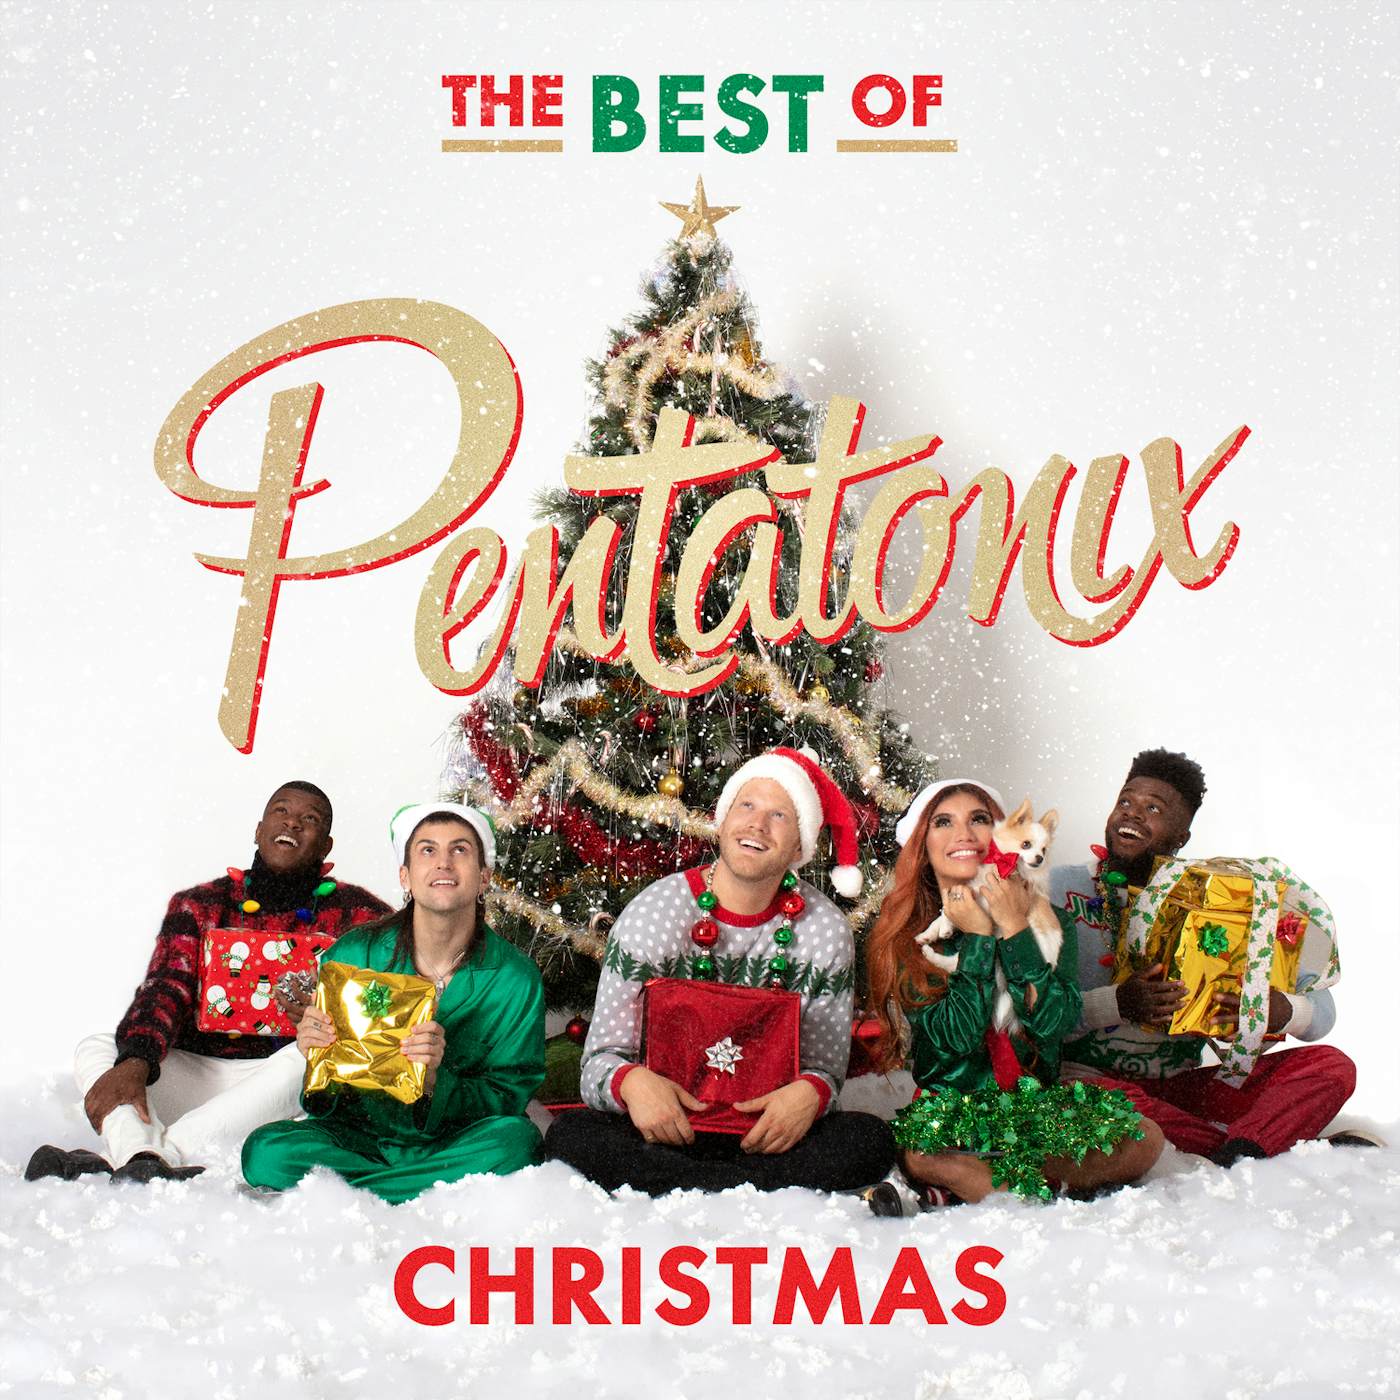 THE BEST OF PENTATONIX CHRISTMAS Vinyl Record